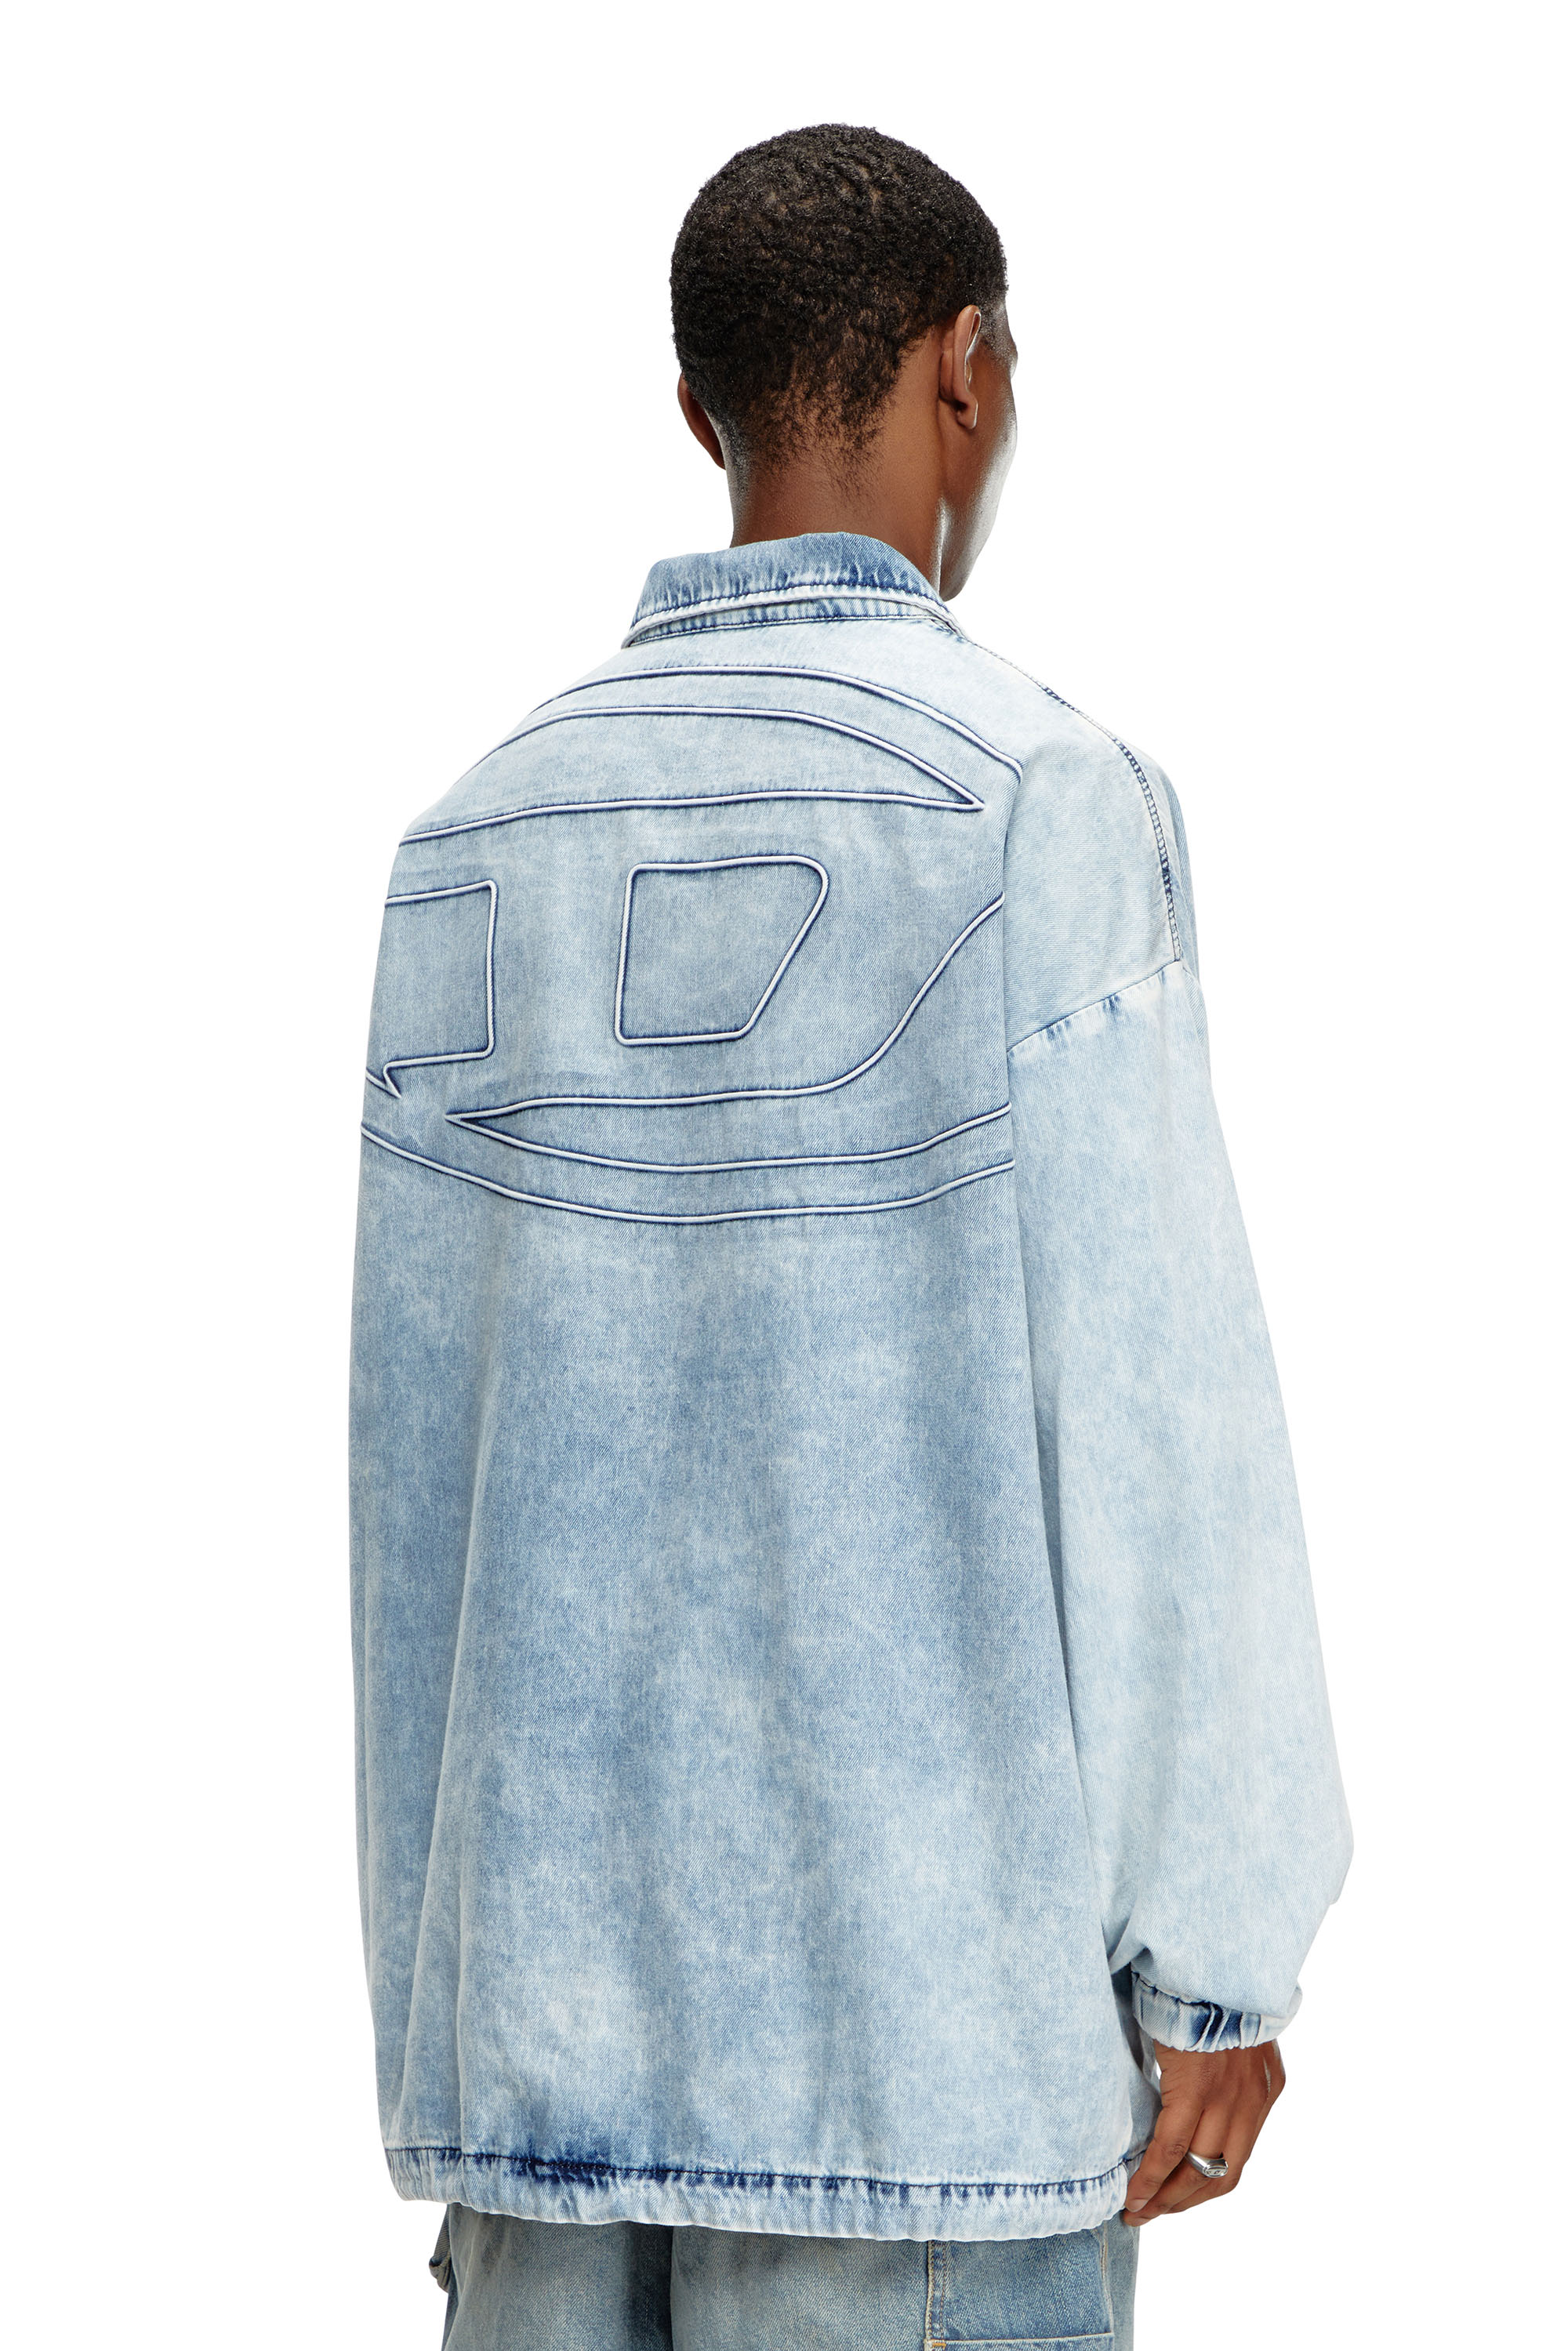 Diesel - D-KRAP-S1, Man Denim jacket with Oval D in Blue - Image 1